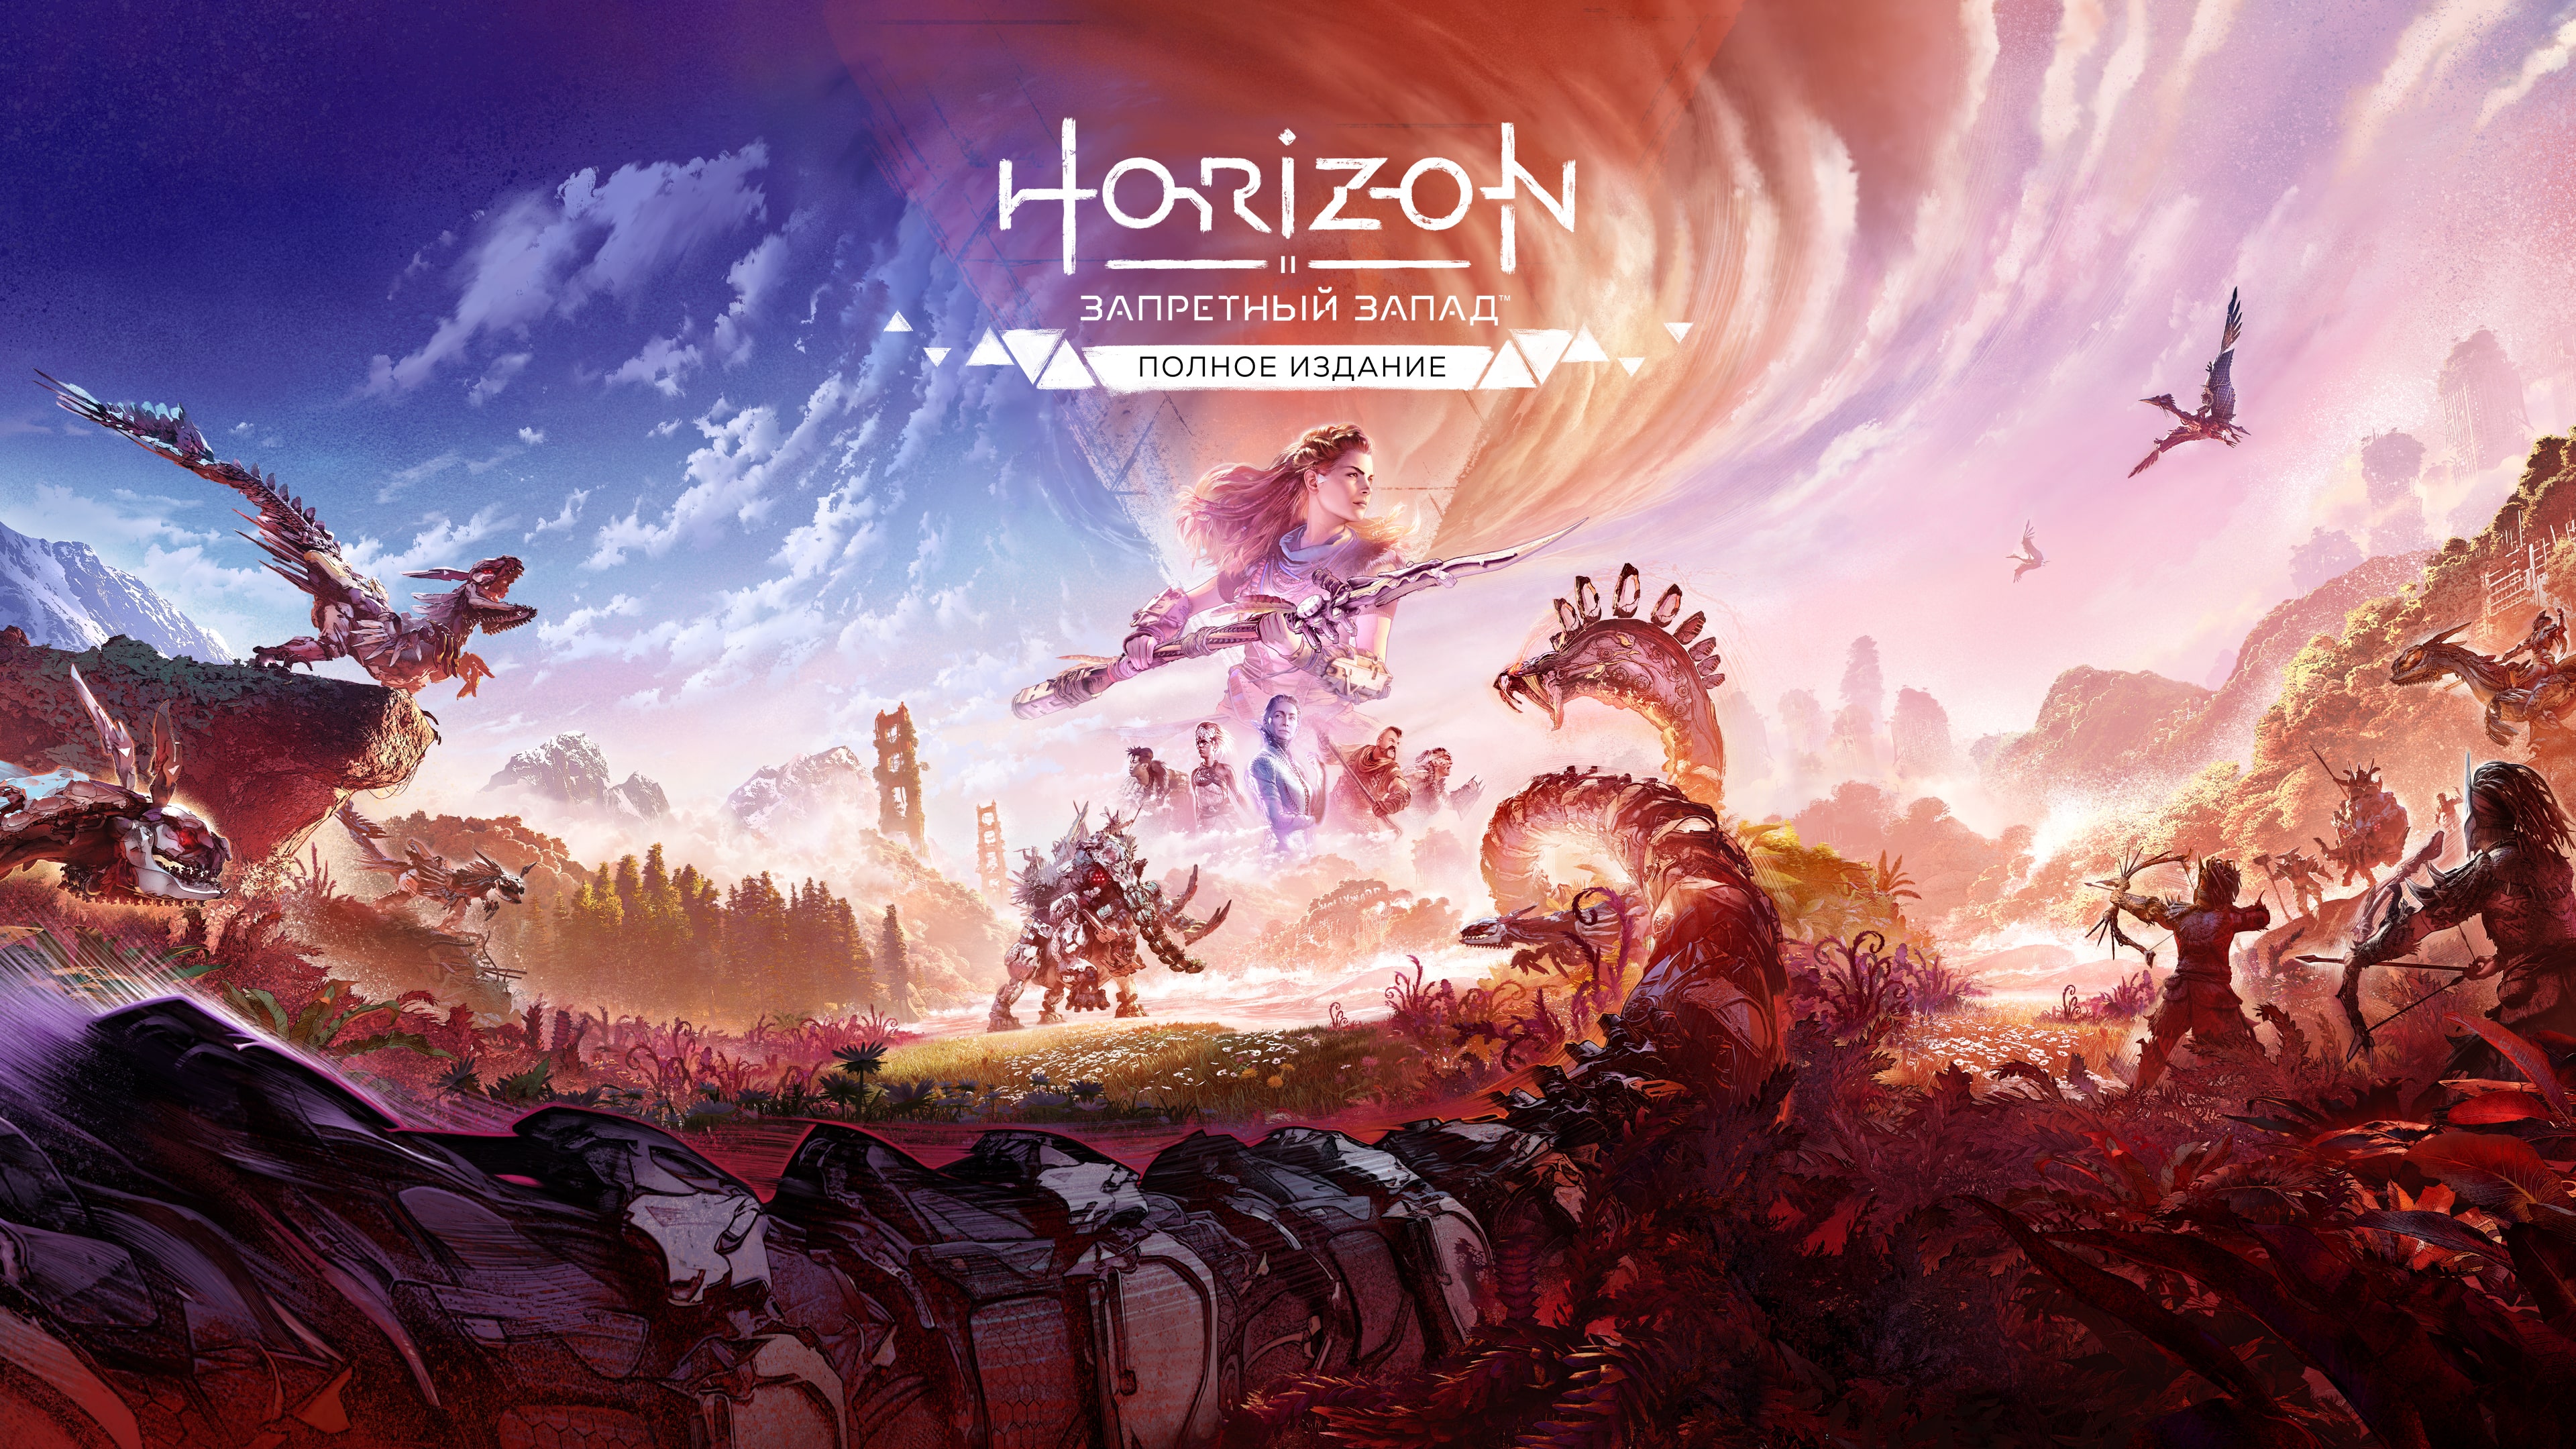 Horizon Forbidden West - Sony PlayStation 5 / PlayStation 4 711719548034